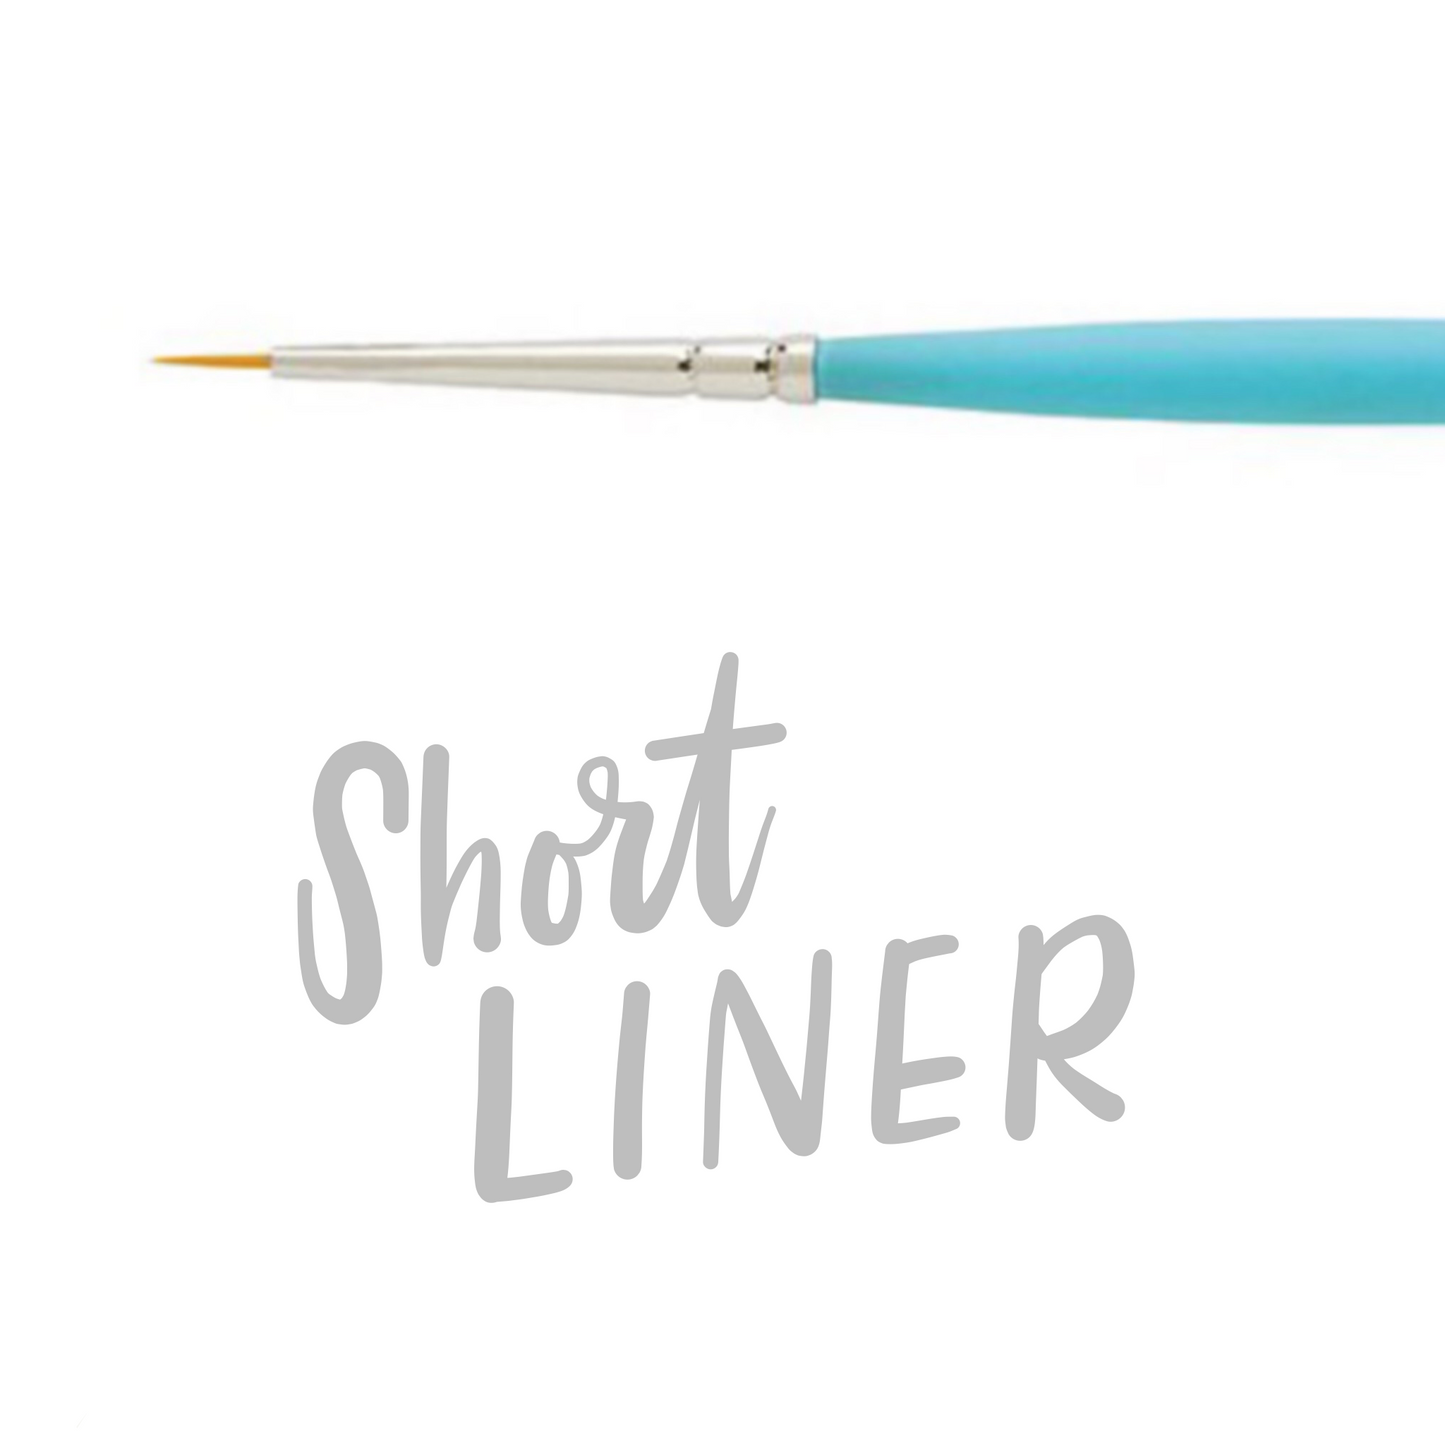 Princeton Select Artiste Mixed Media Paintbrushes - Short Liner - by Princeton - K. A. Artist Shop